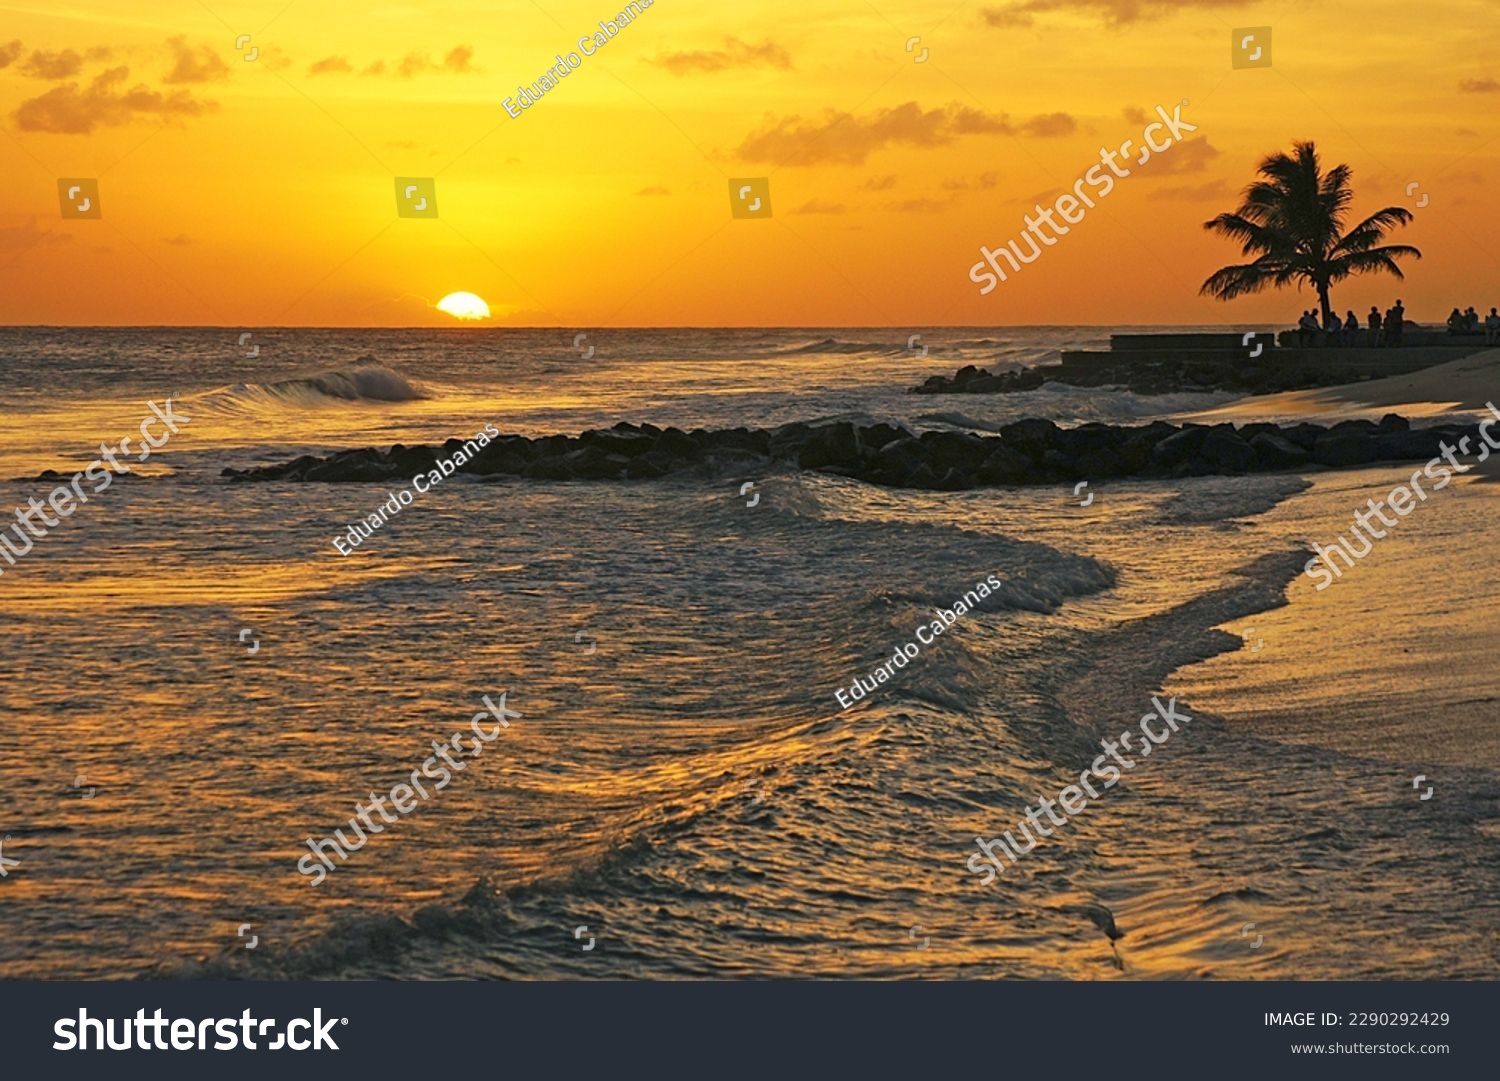 Sunset at Hastings Beach - Barbados Island #2290292429